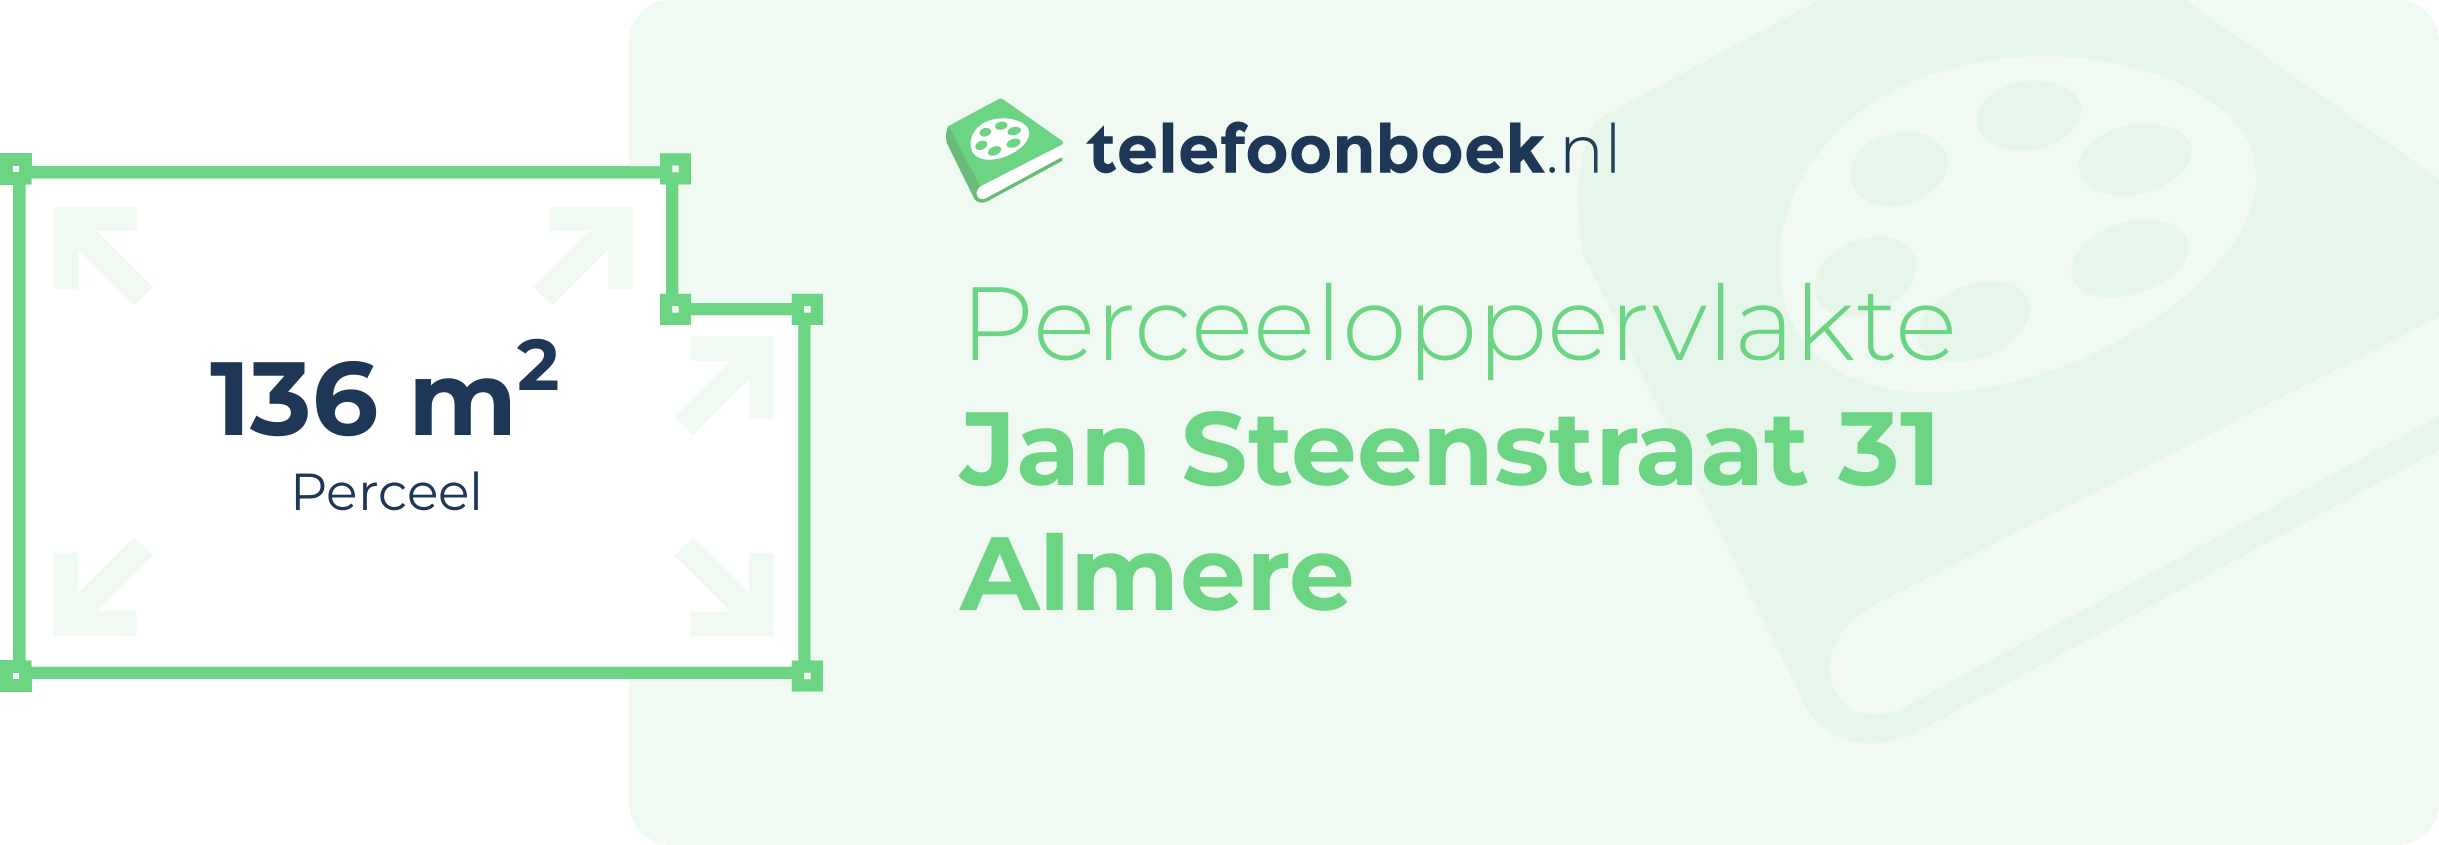 Perceeloppervlakte Jan Steenstraat 31 Almere